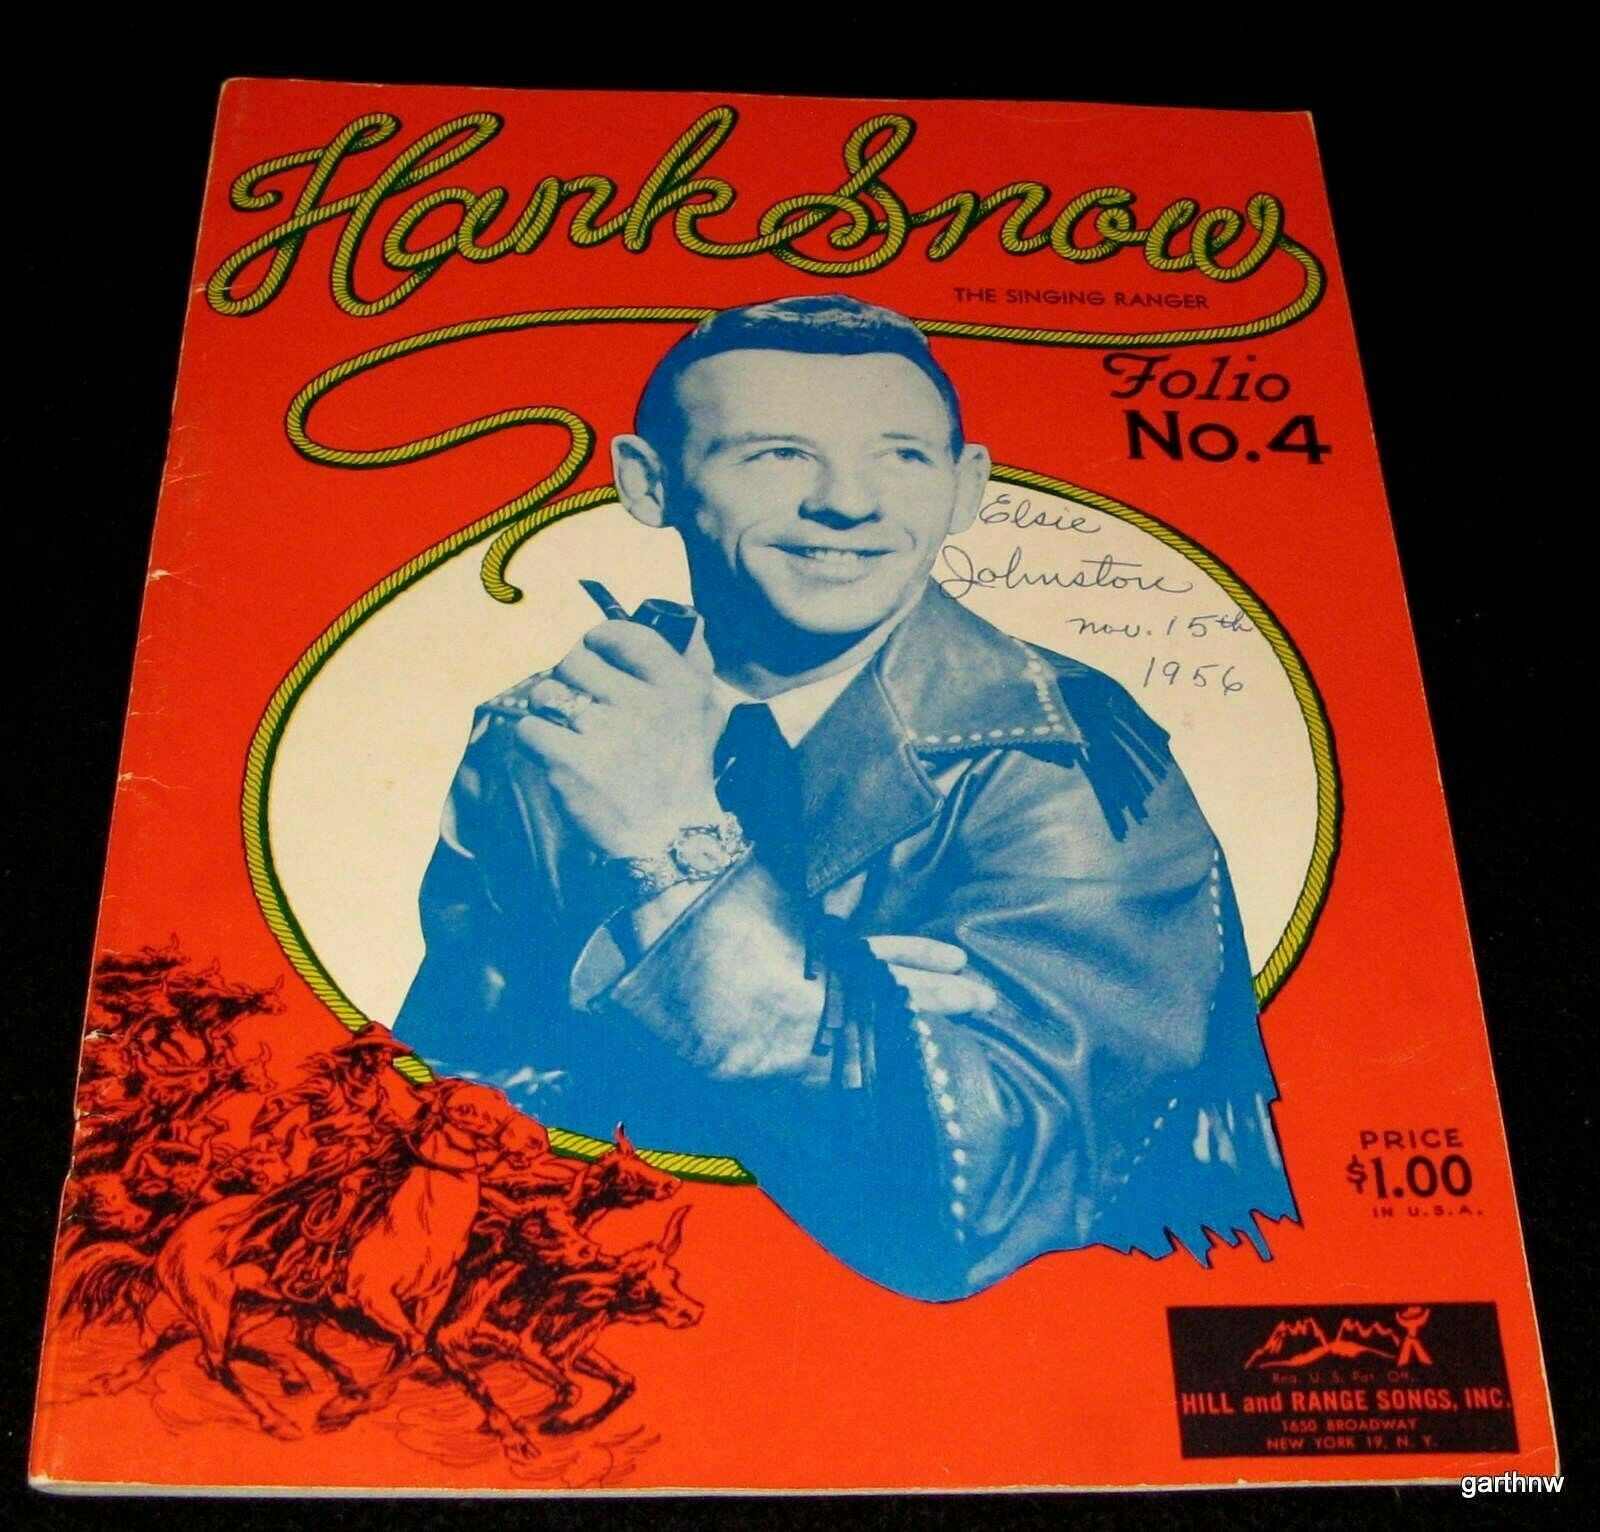 HANK SNOW 1956 COUNTRY MUSIC SONG FOLIO No. 4  LYRICS & PHOTOS * SINGING RANGER